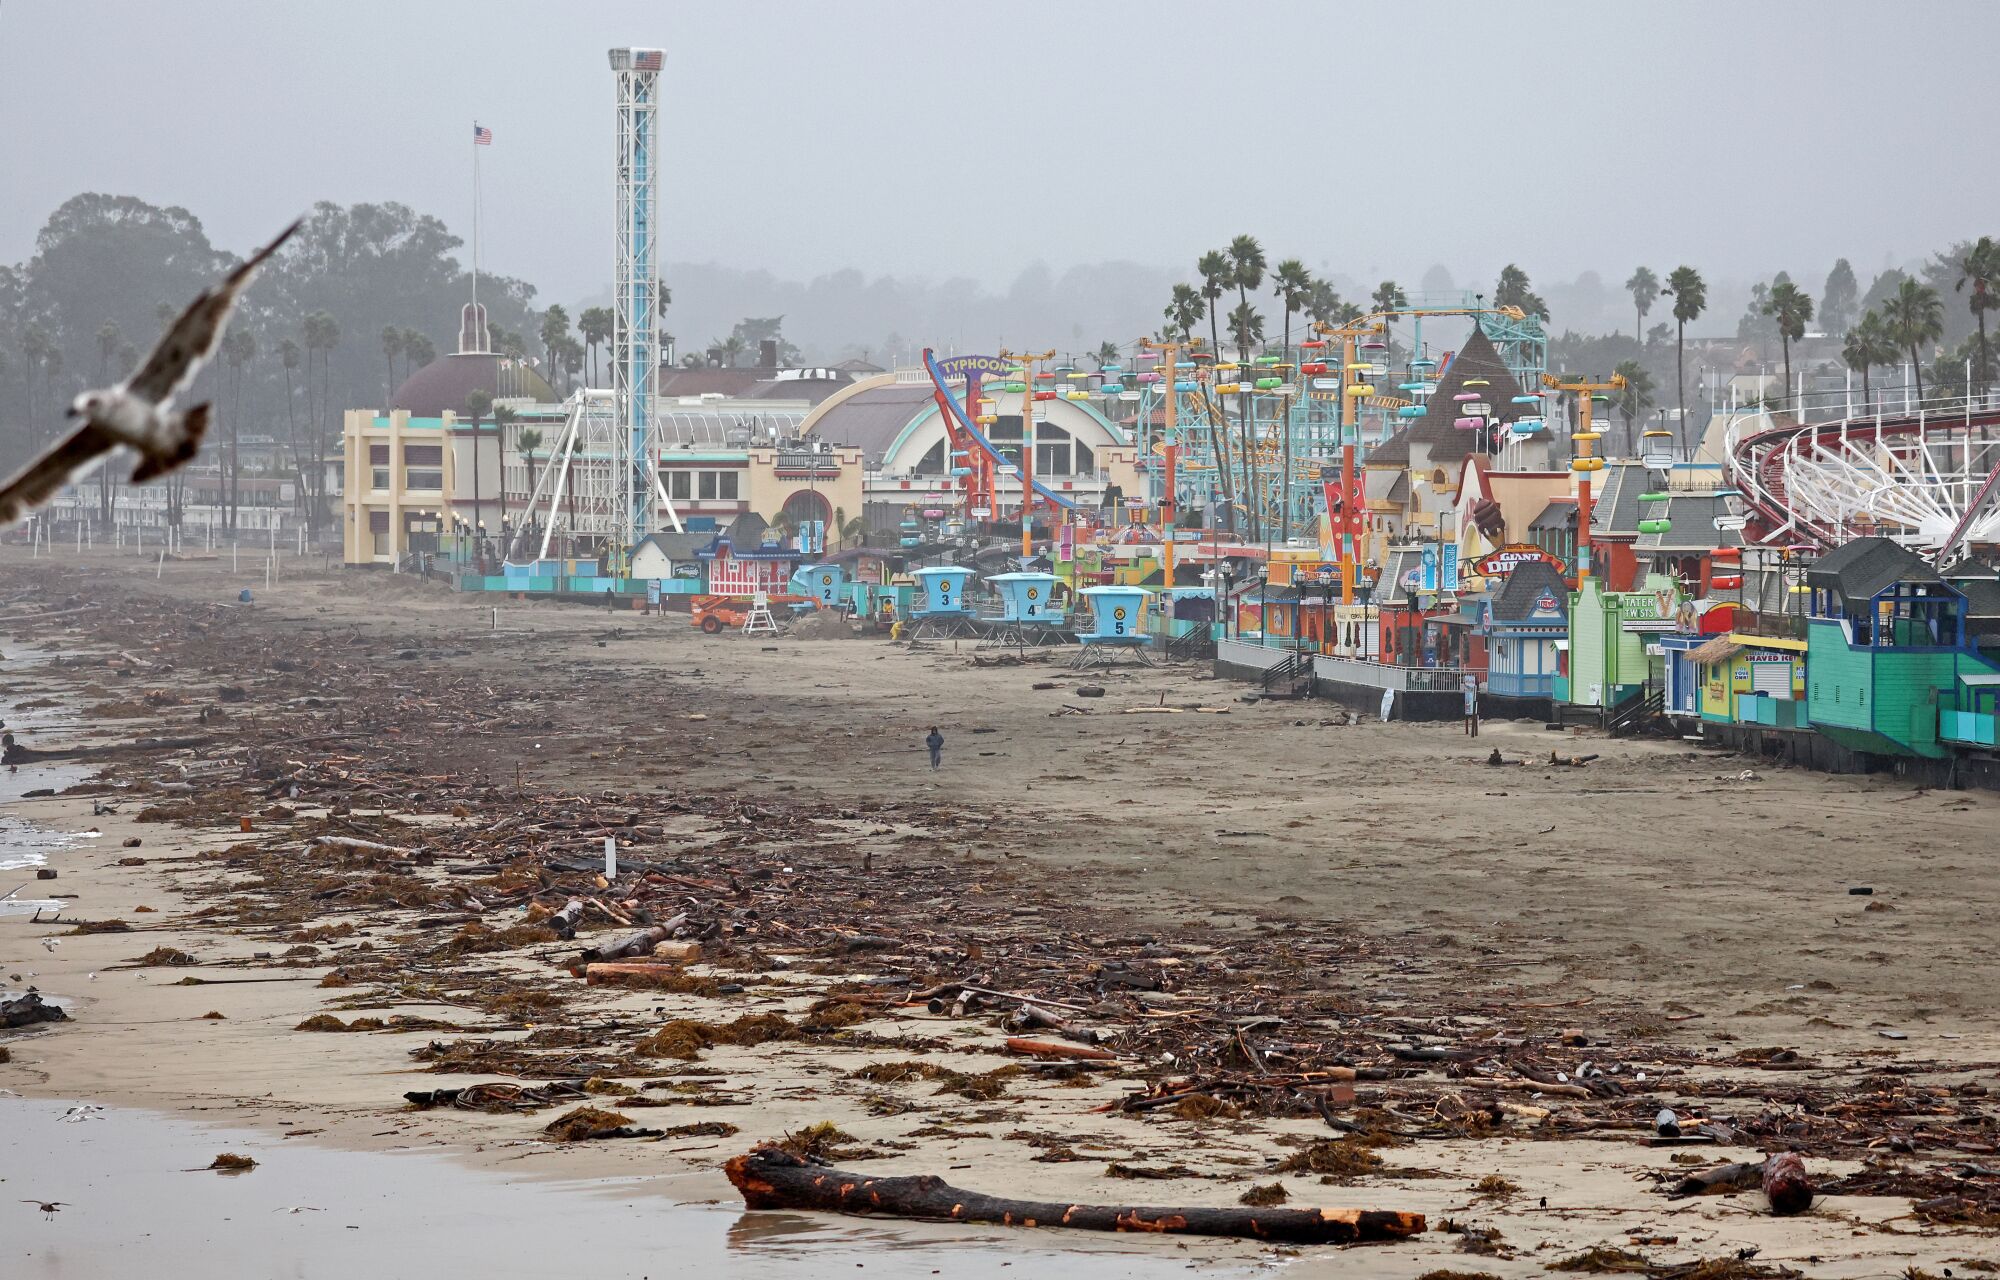 A one person walks near driftwood storm debris washed up on a beach in front of the Santa Cruz Beach Boardwalk